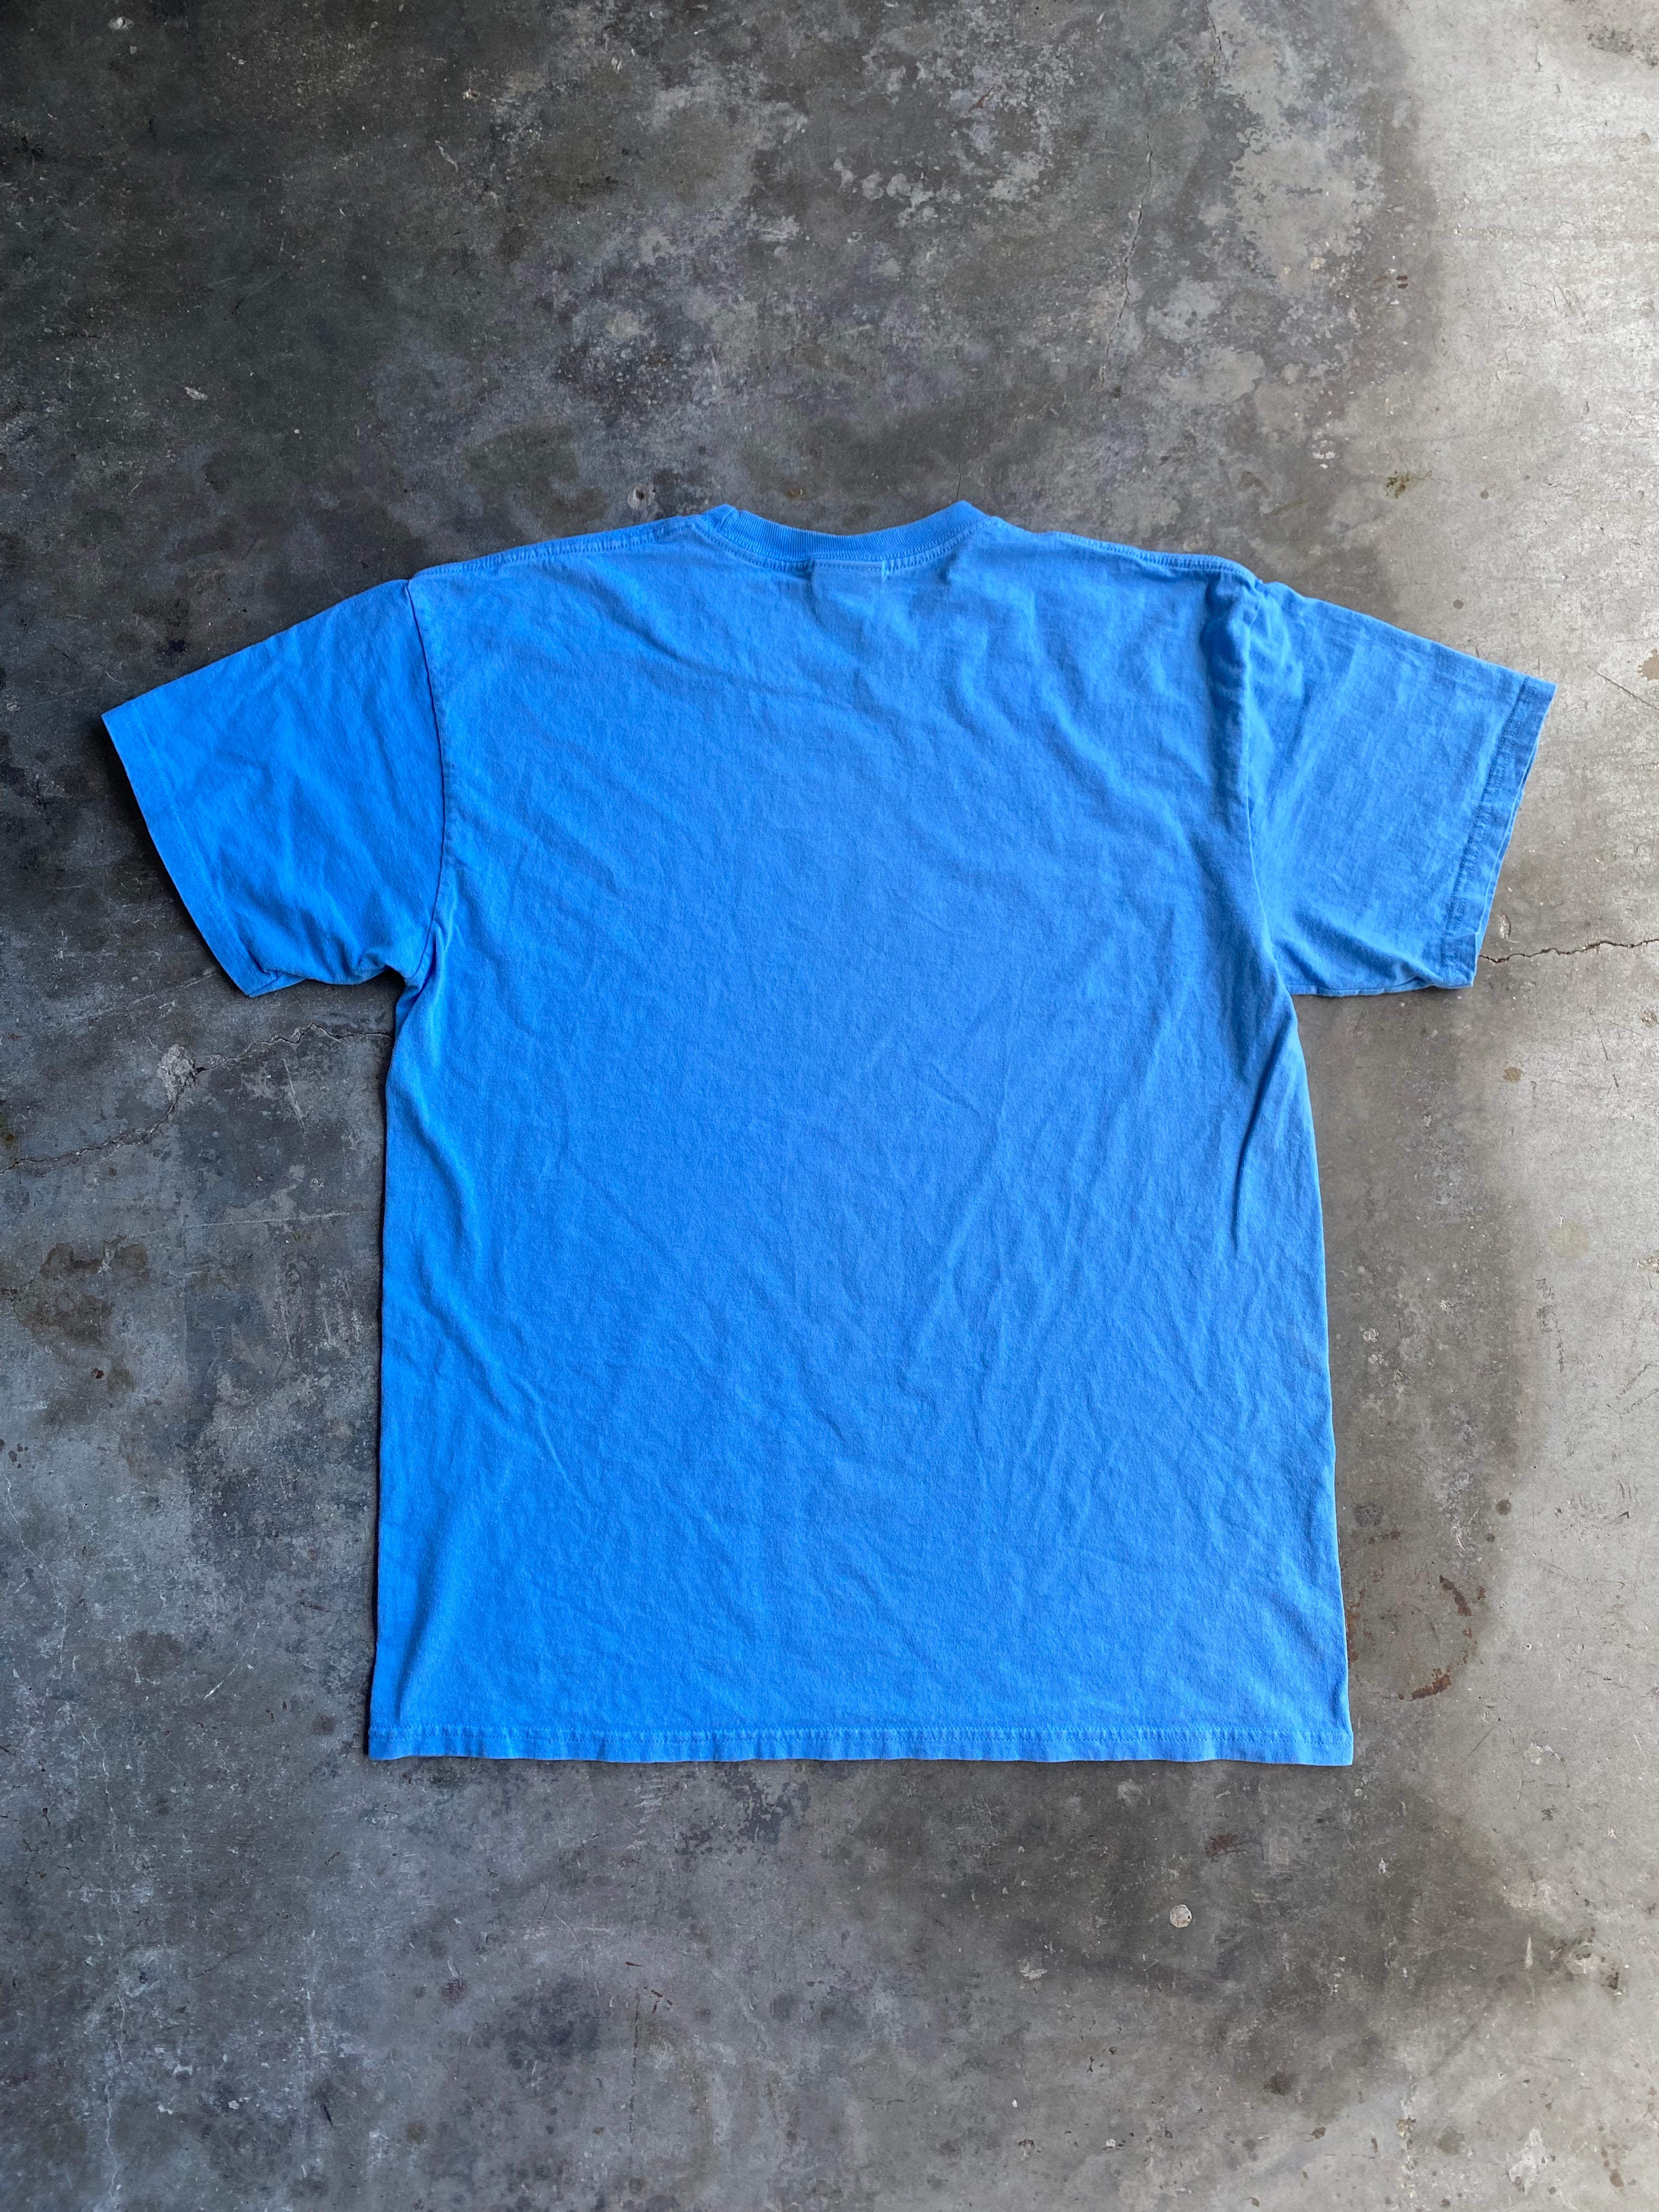 Vintage Nike T-Shirt - XL